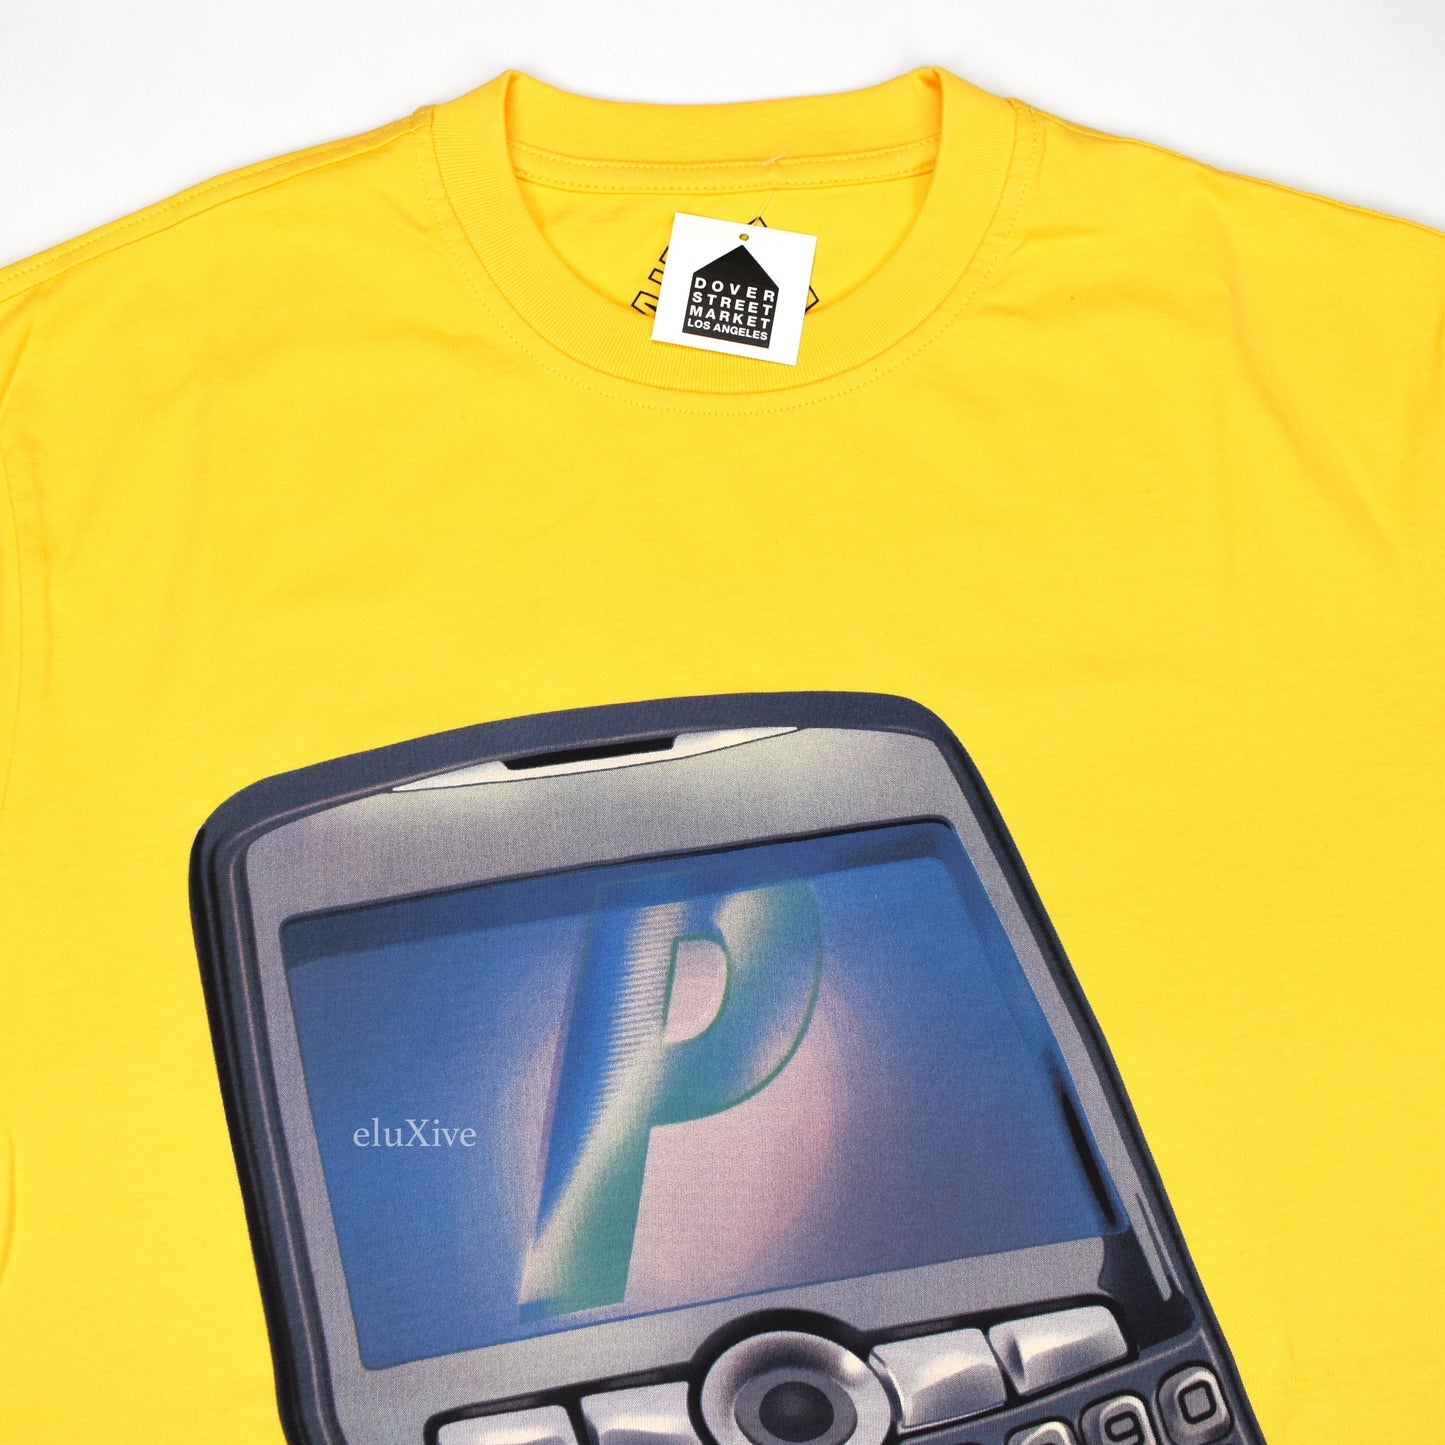 Palace - Ping Phone Logo T-Shirt (Yellow)